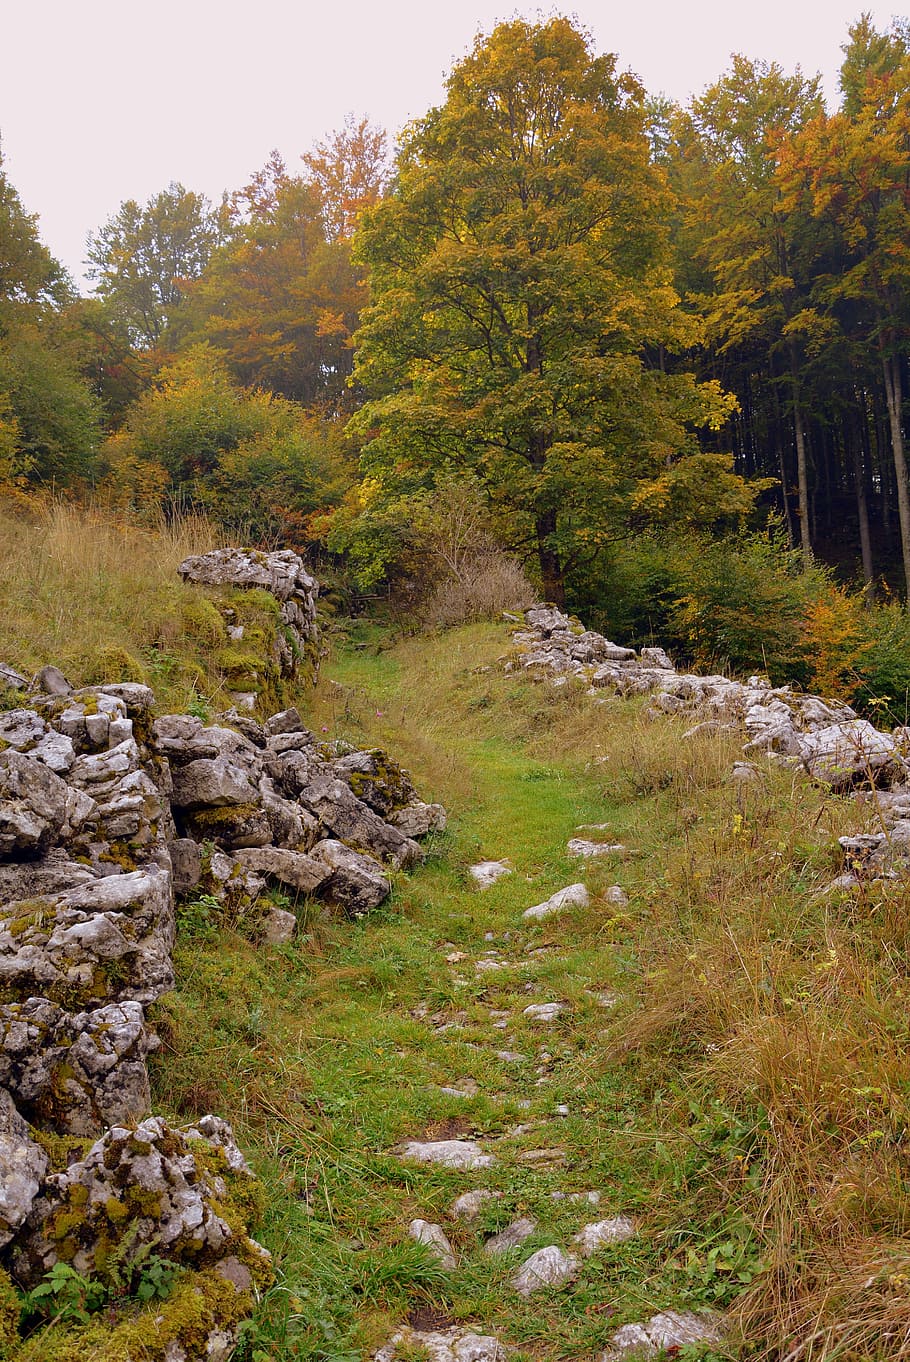 sendero, piedras, hierba, sassi, bosque, otoño, el camino europeo, e5, lessinia, italia